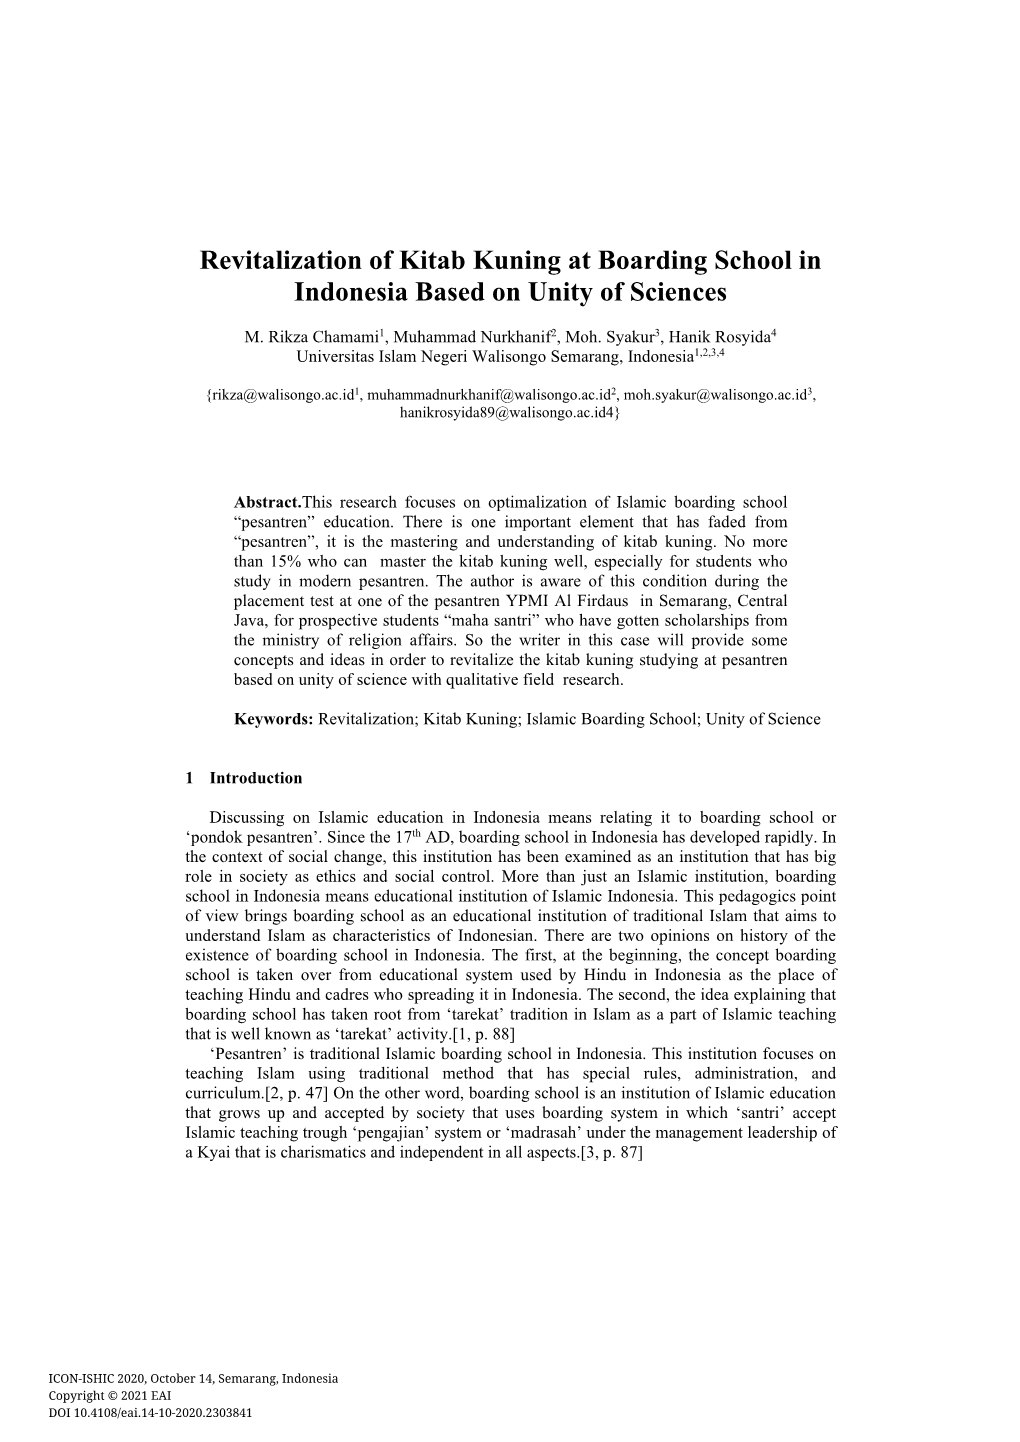 Revitalization of Kitab Kuning at Boarding School in Indonesia Based on Unity of Sciences